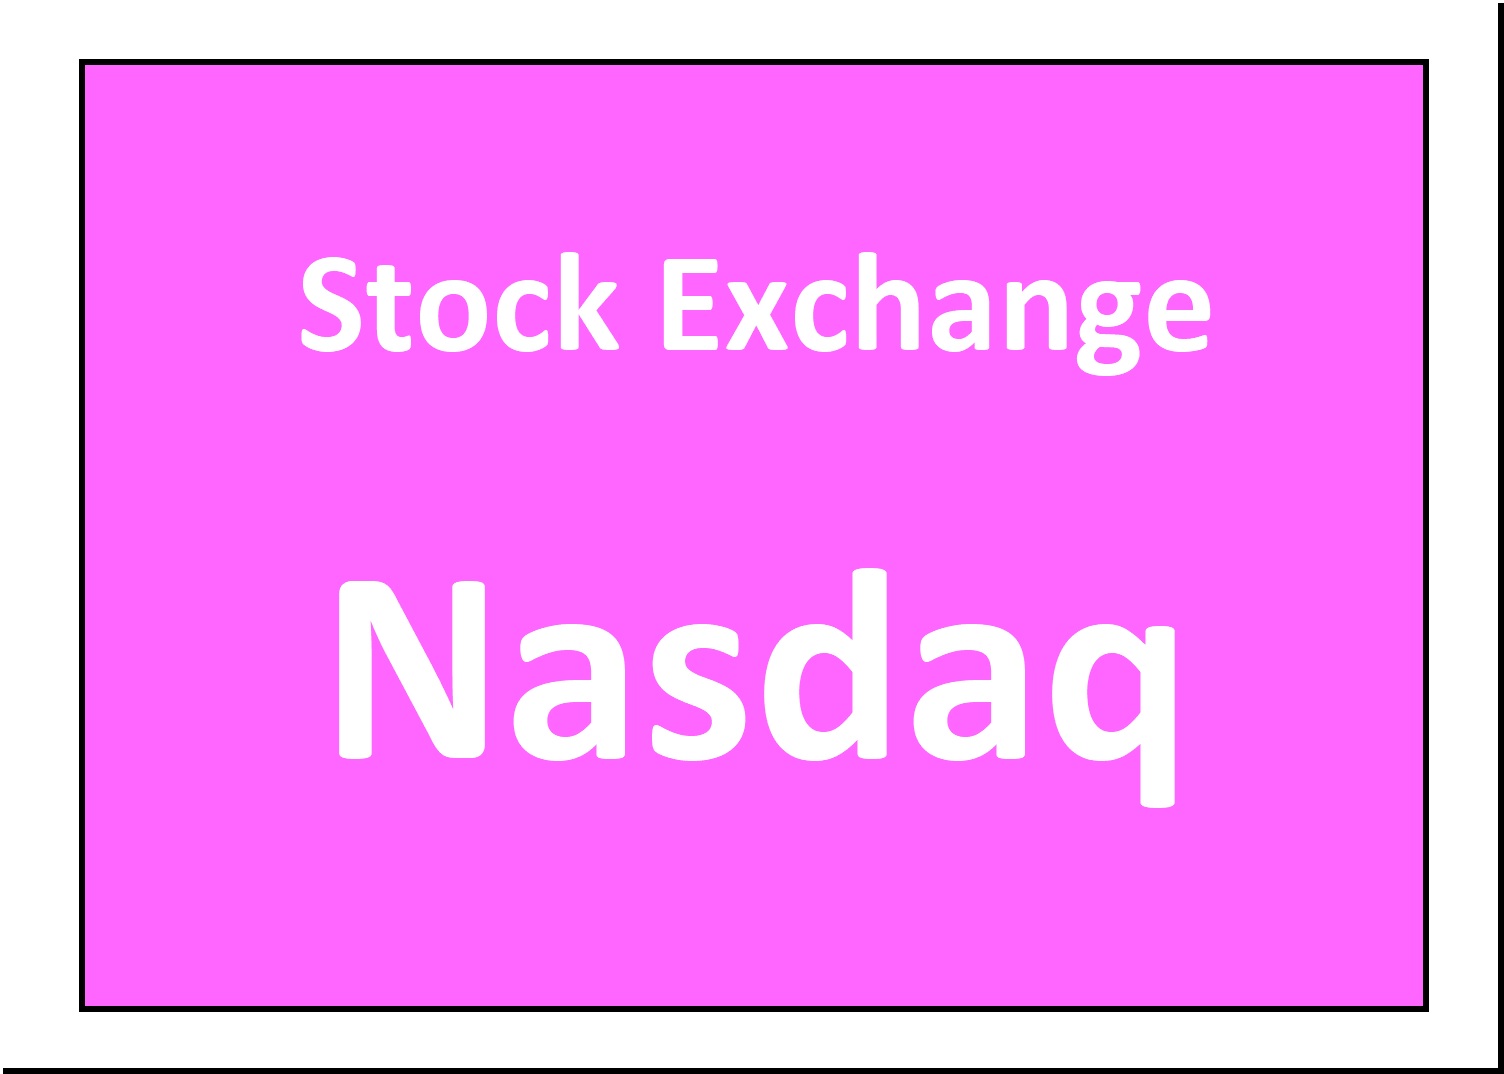 Stock Exchange Nasdaq